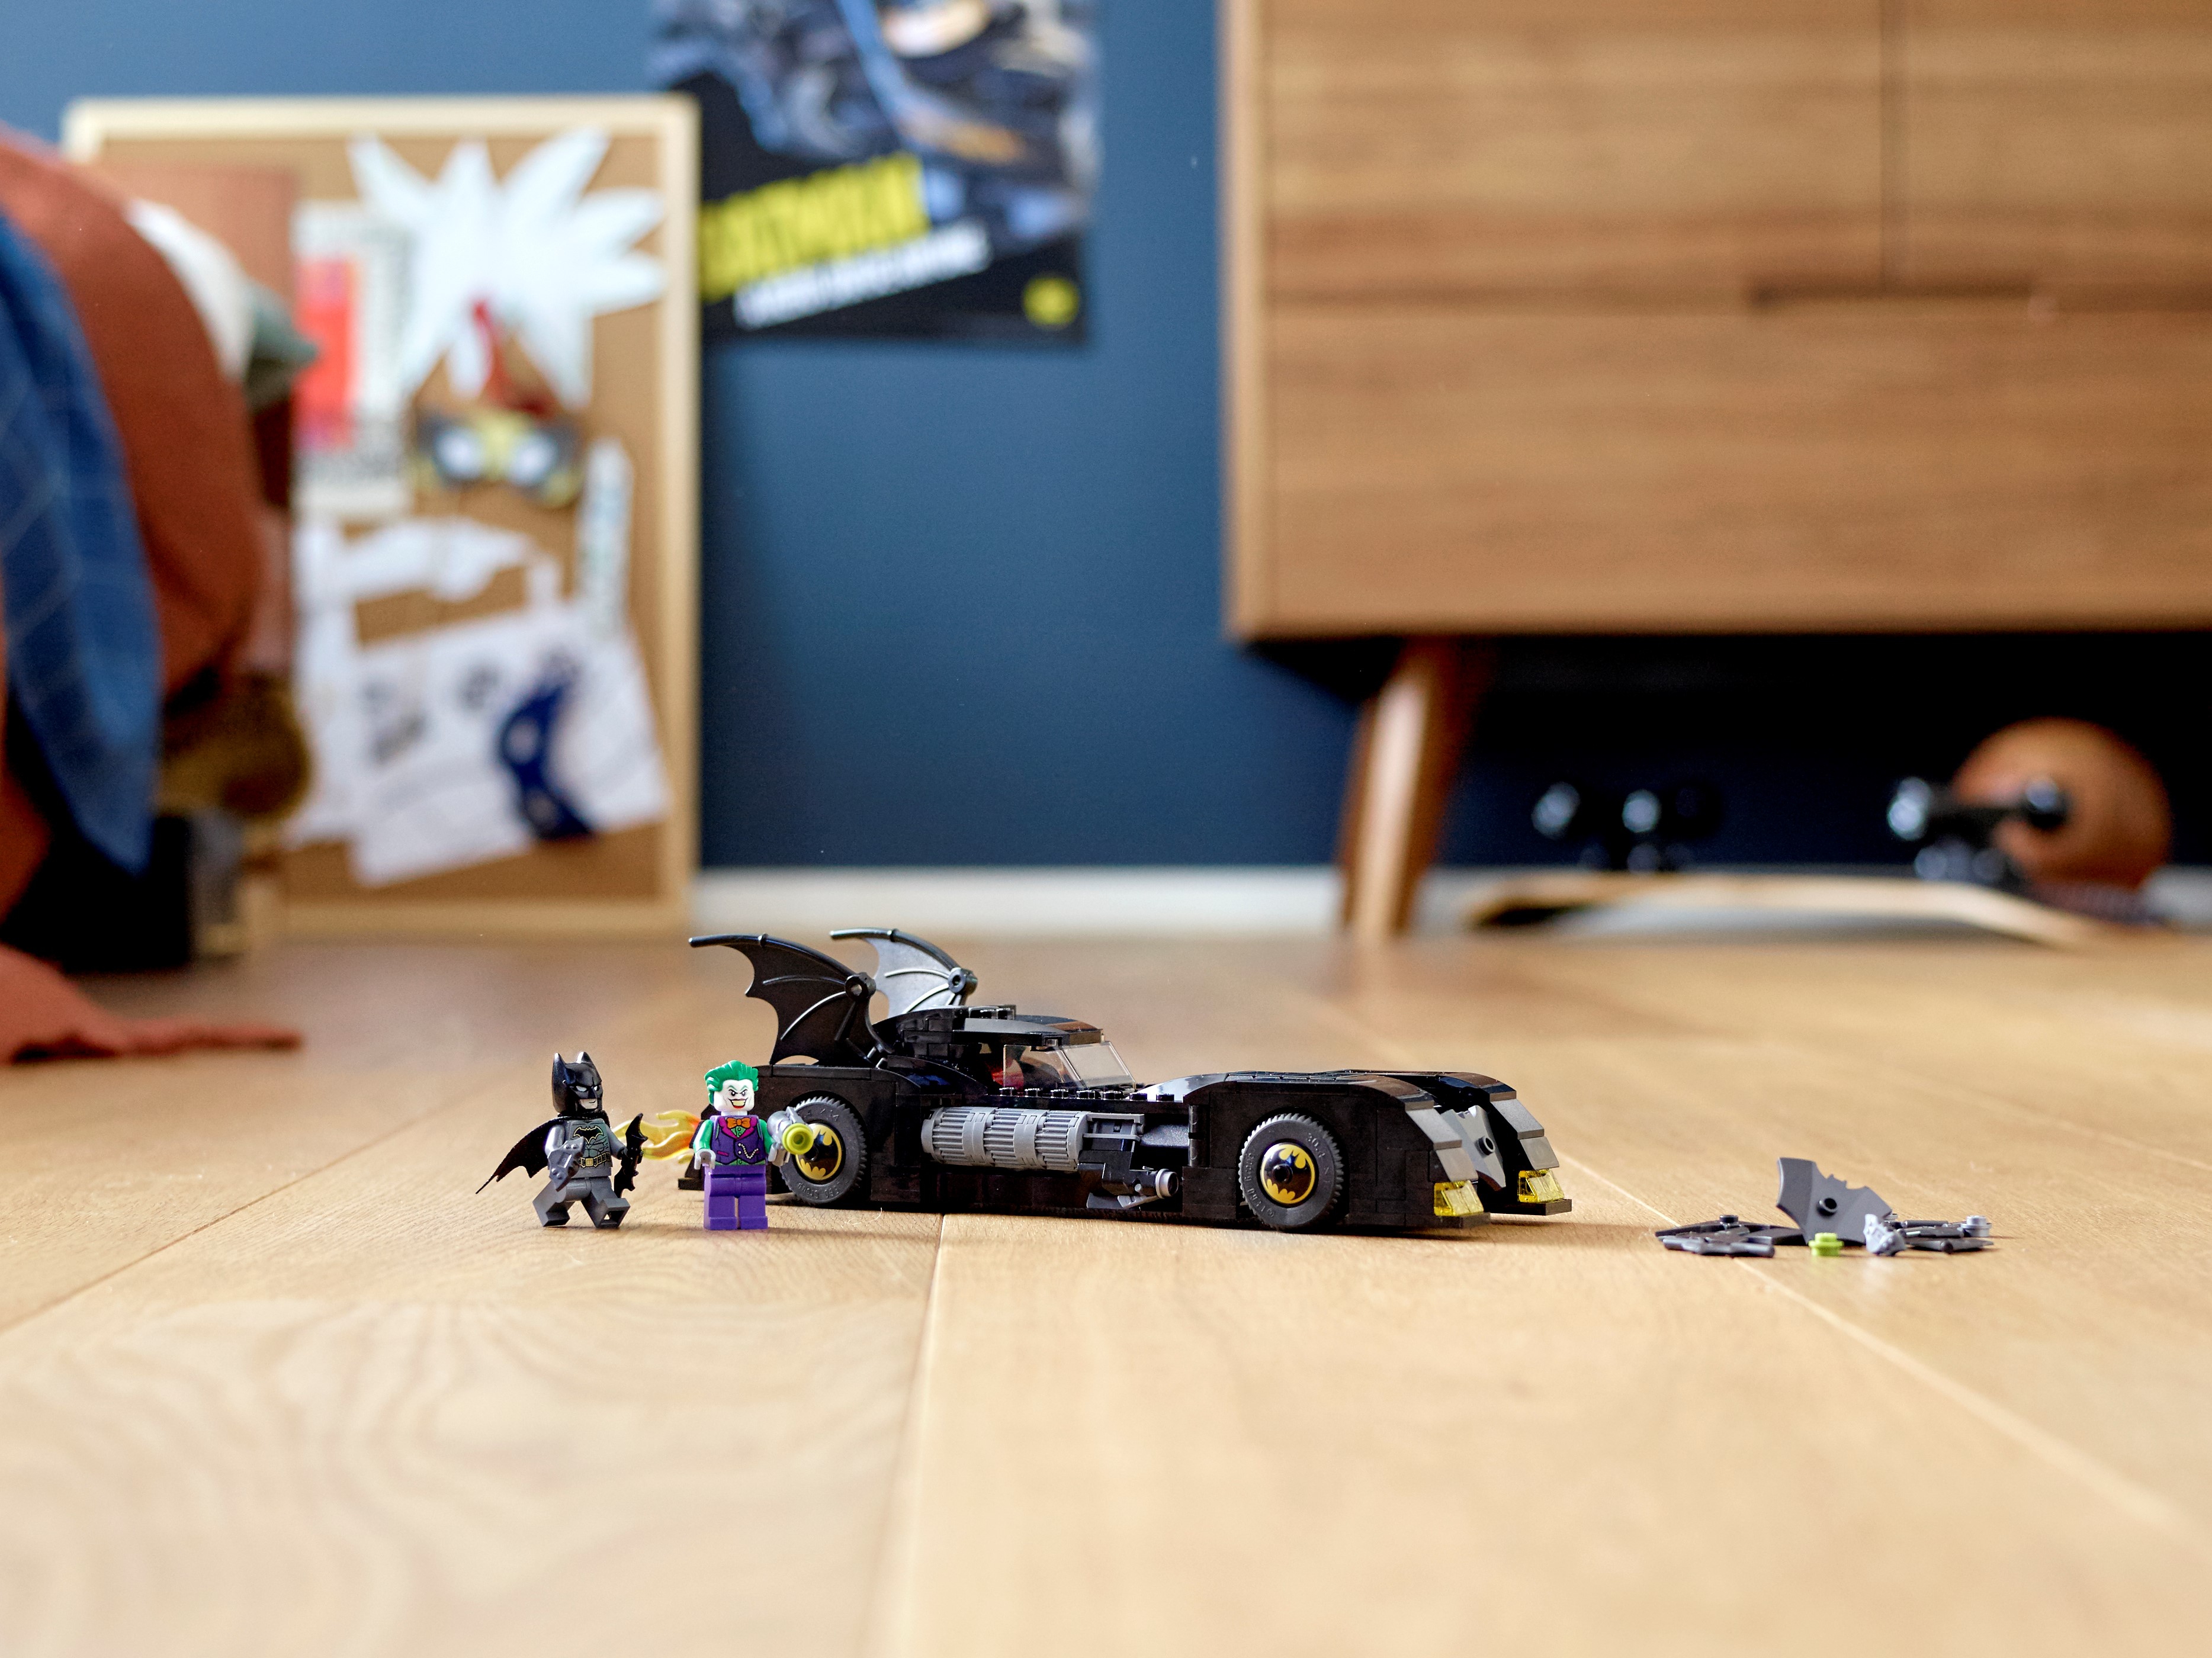 76119 Pursuit of The Joker Super Heroes LEGO Batmobile for sale online 